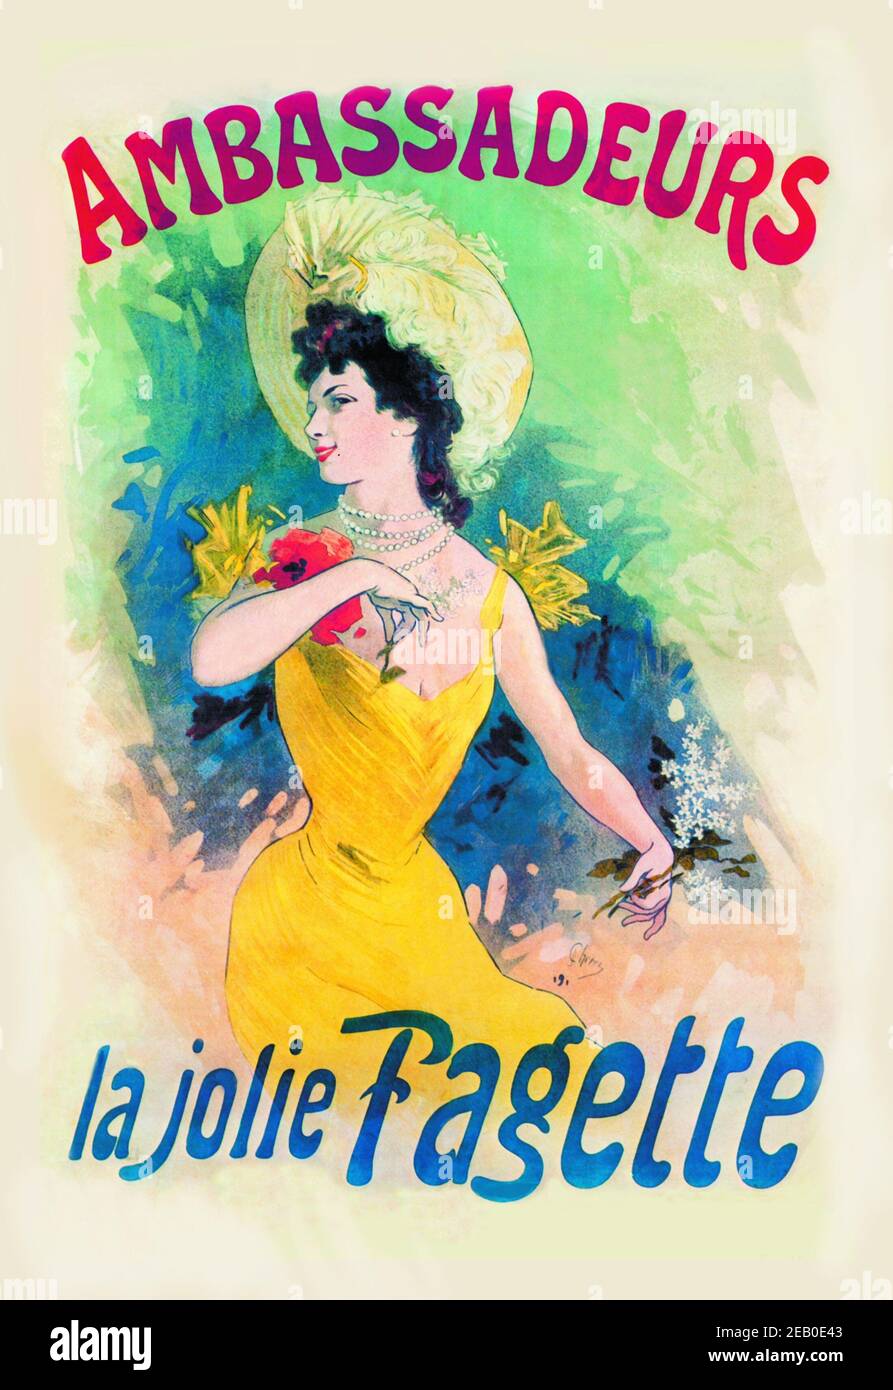 Ambassadeurs: La Jolie Fagette 1900 Stock Photo